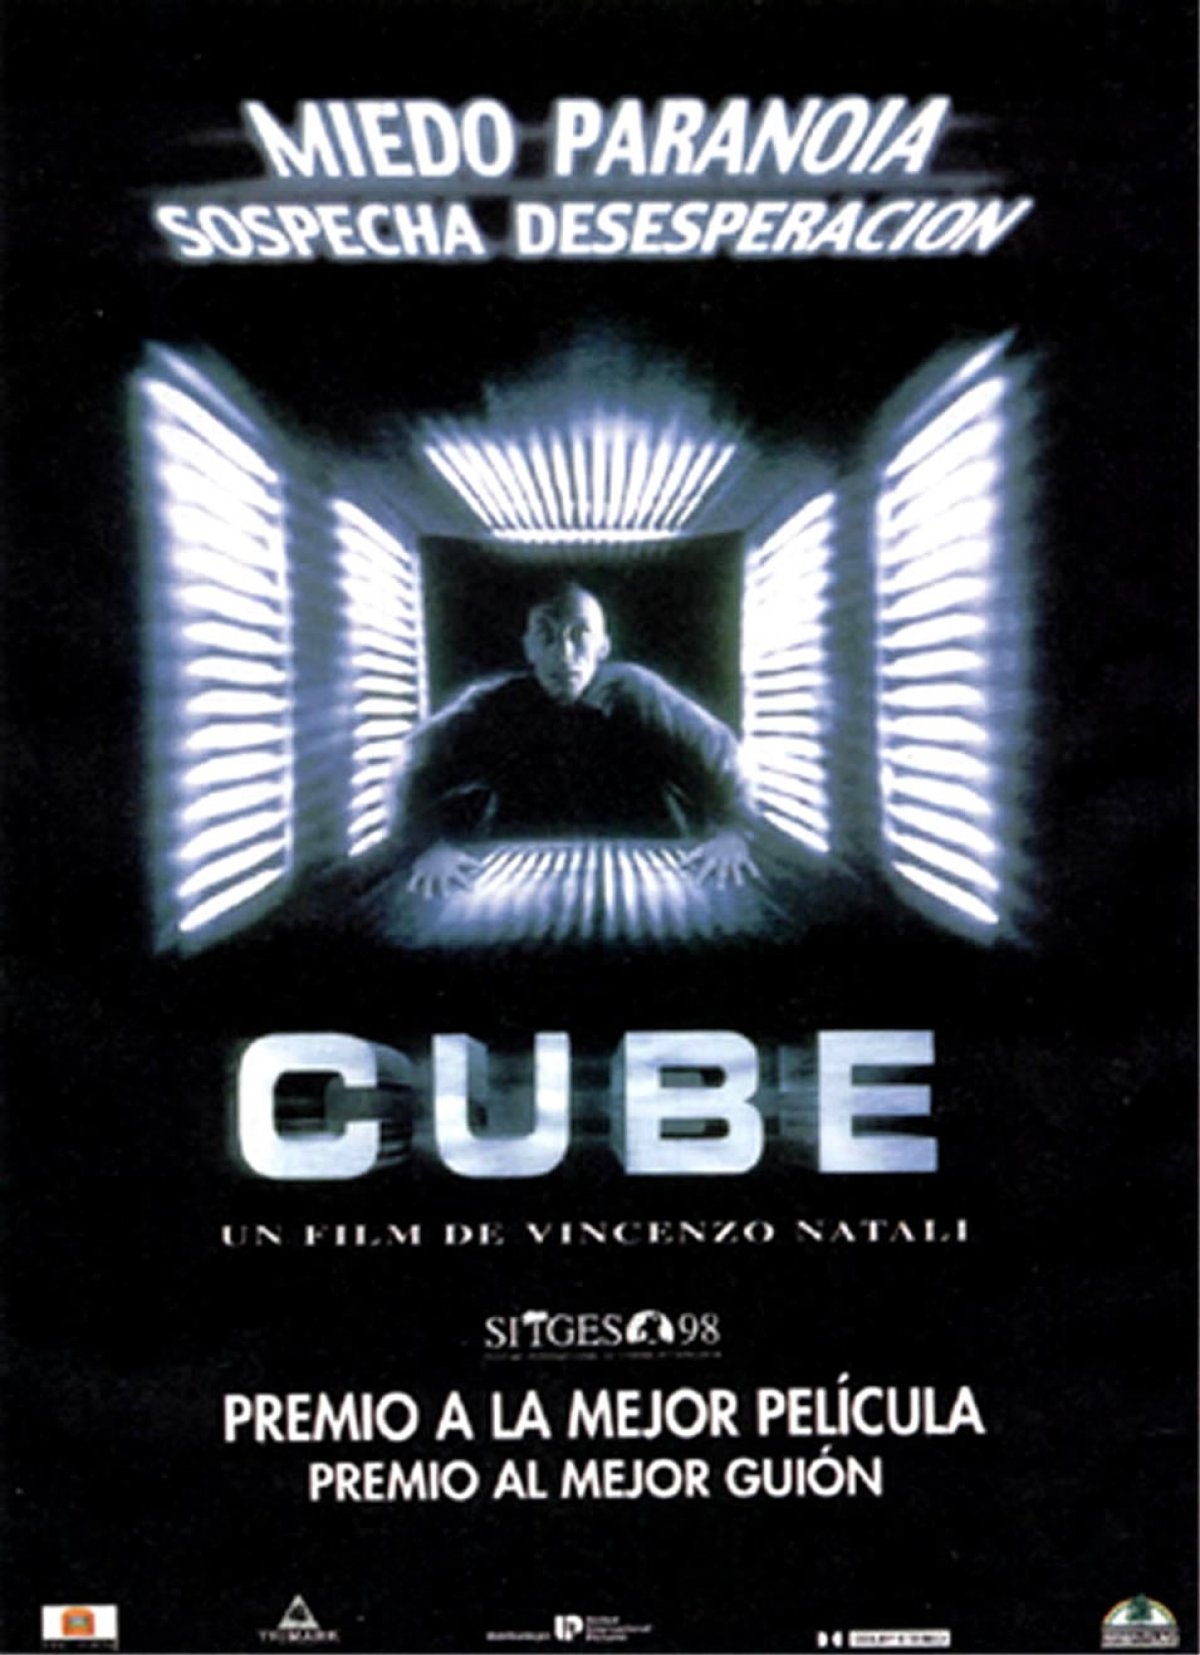 Cube (1997), Vincenzo Natali